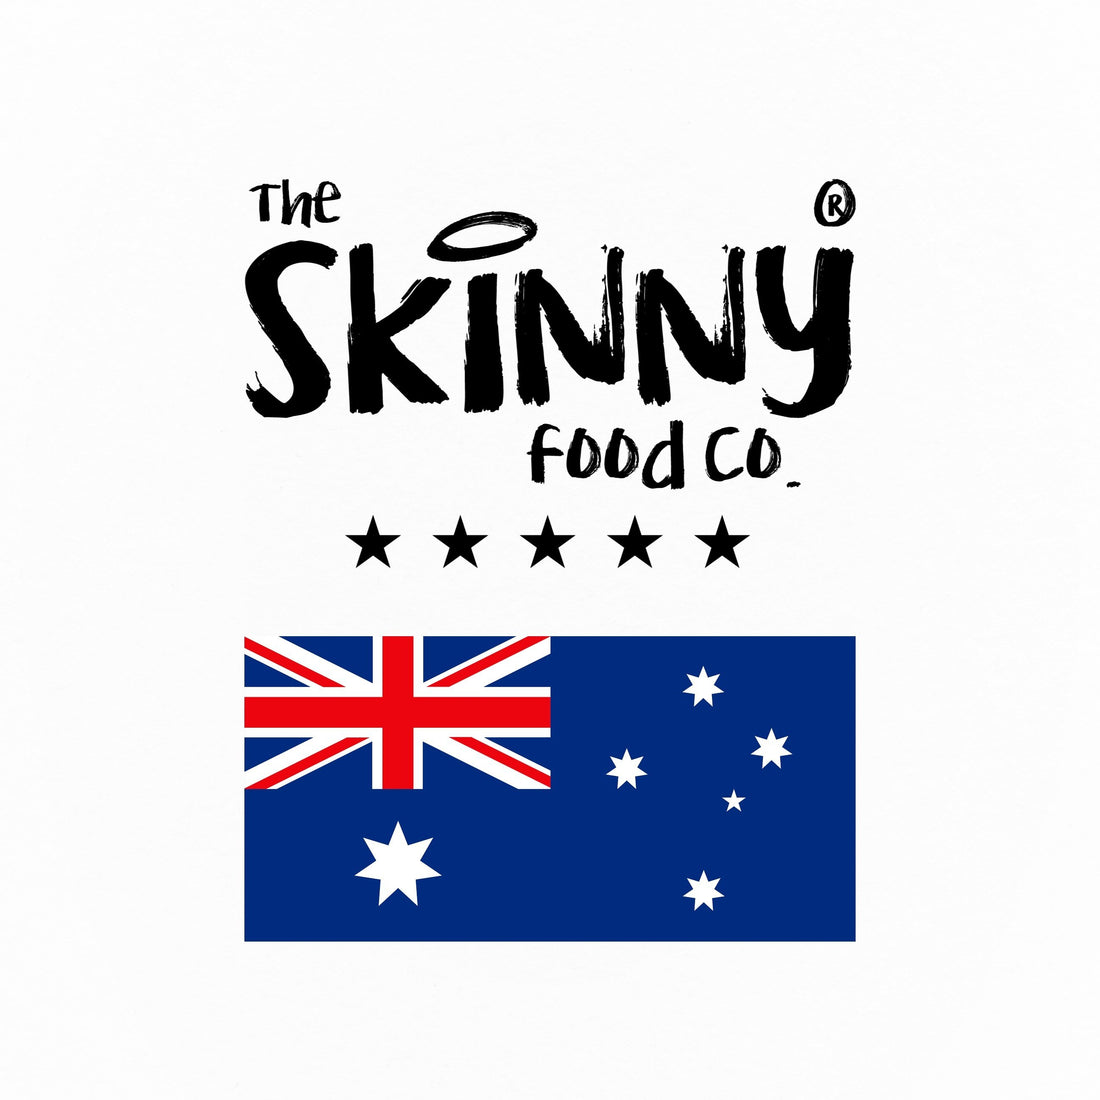 La Skinny Food Co Lanĉas en Aŭstralio! - theskinnyfoodco